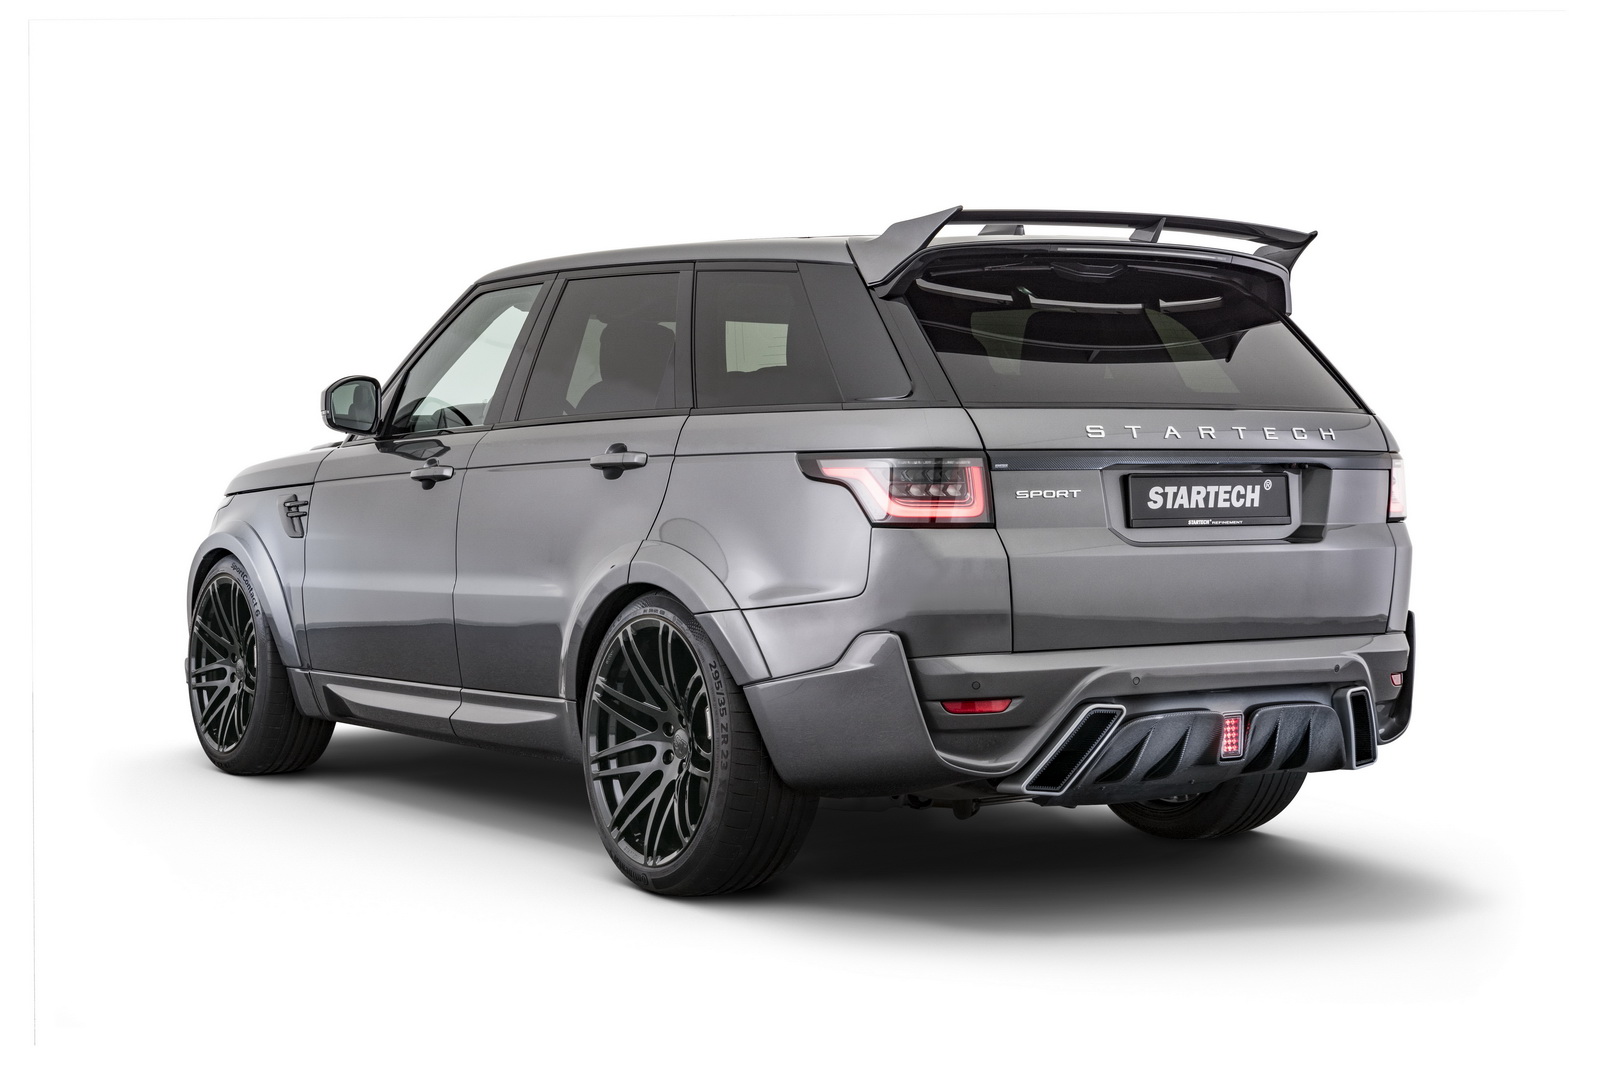 2019 Startech Range Rover Sport Rear Three-quarter - Range Rover Sport Startech 2019 - HD Wallpaper 